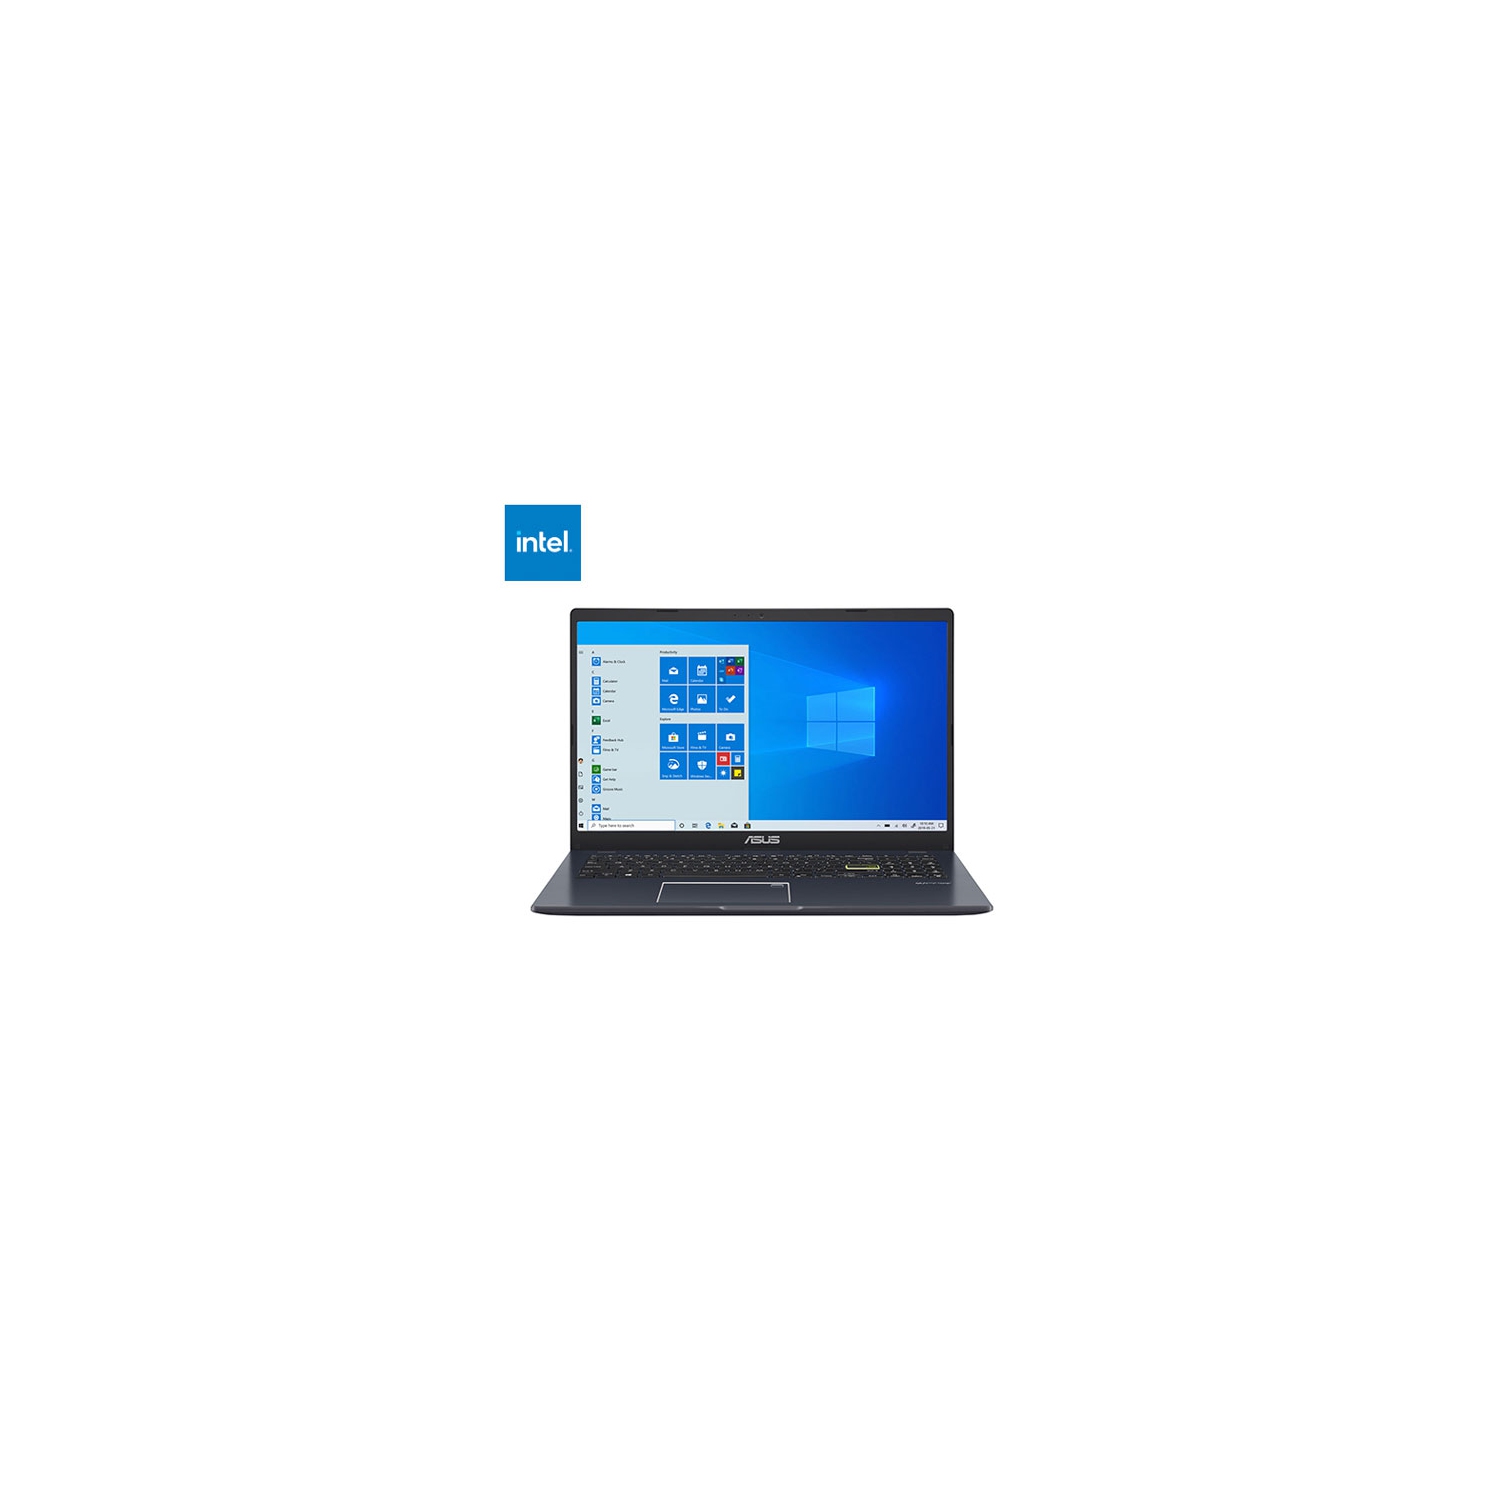 ASUS L510 15.6" Laptop - Star Black (Intel Celeron N4020/64GB eMMC/4GB RAM/Windows 10 S) - Open Box